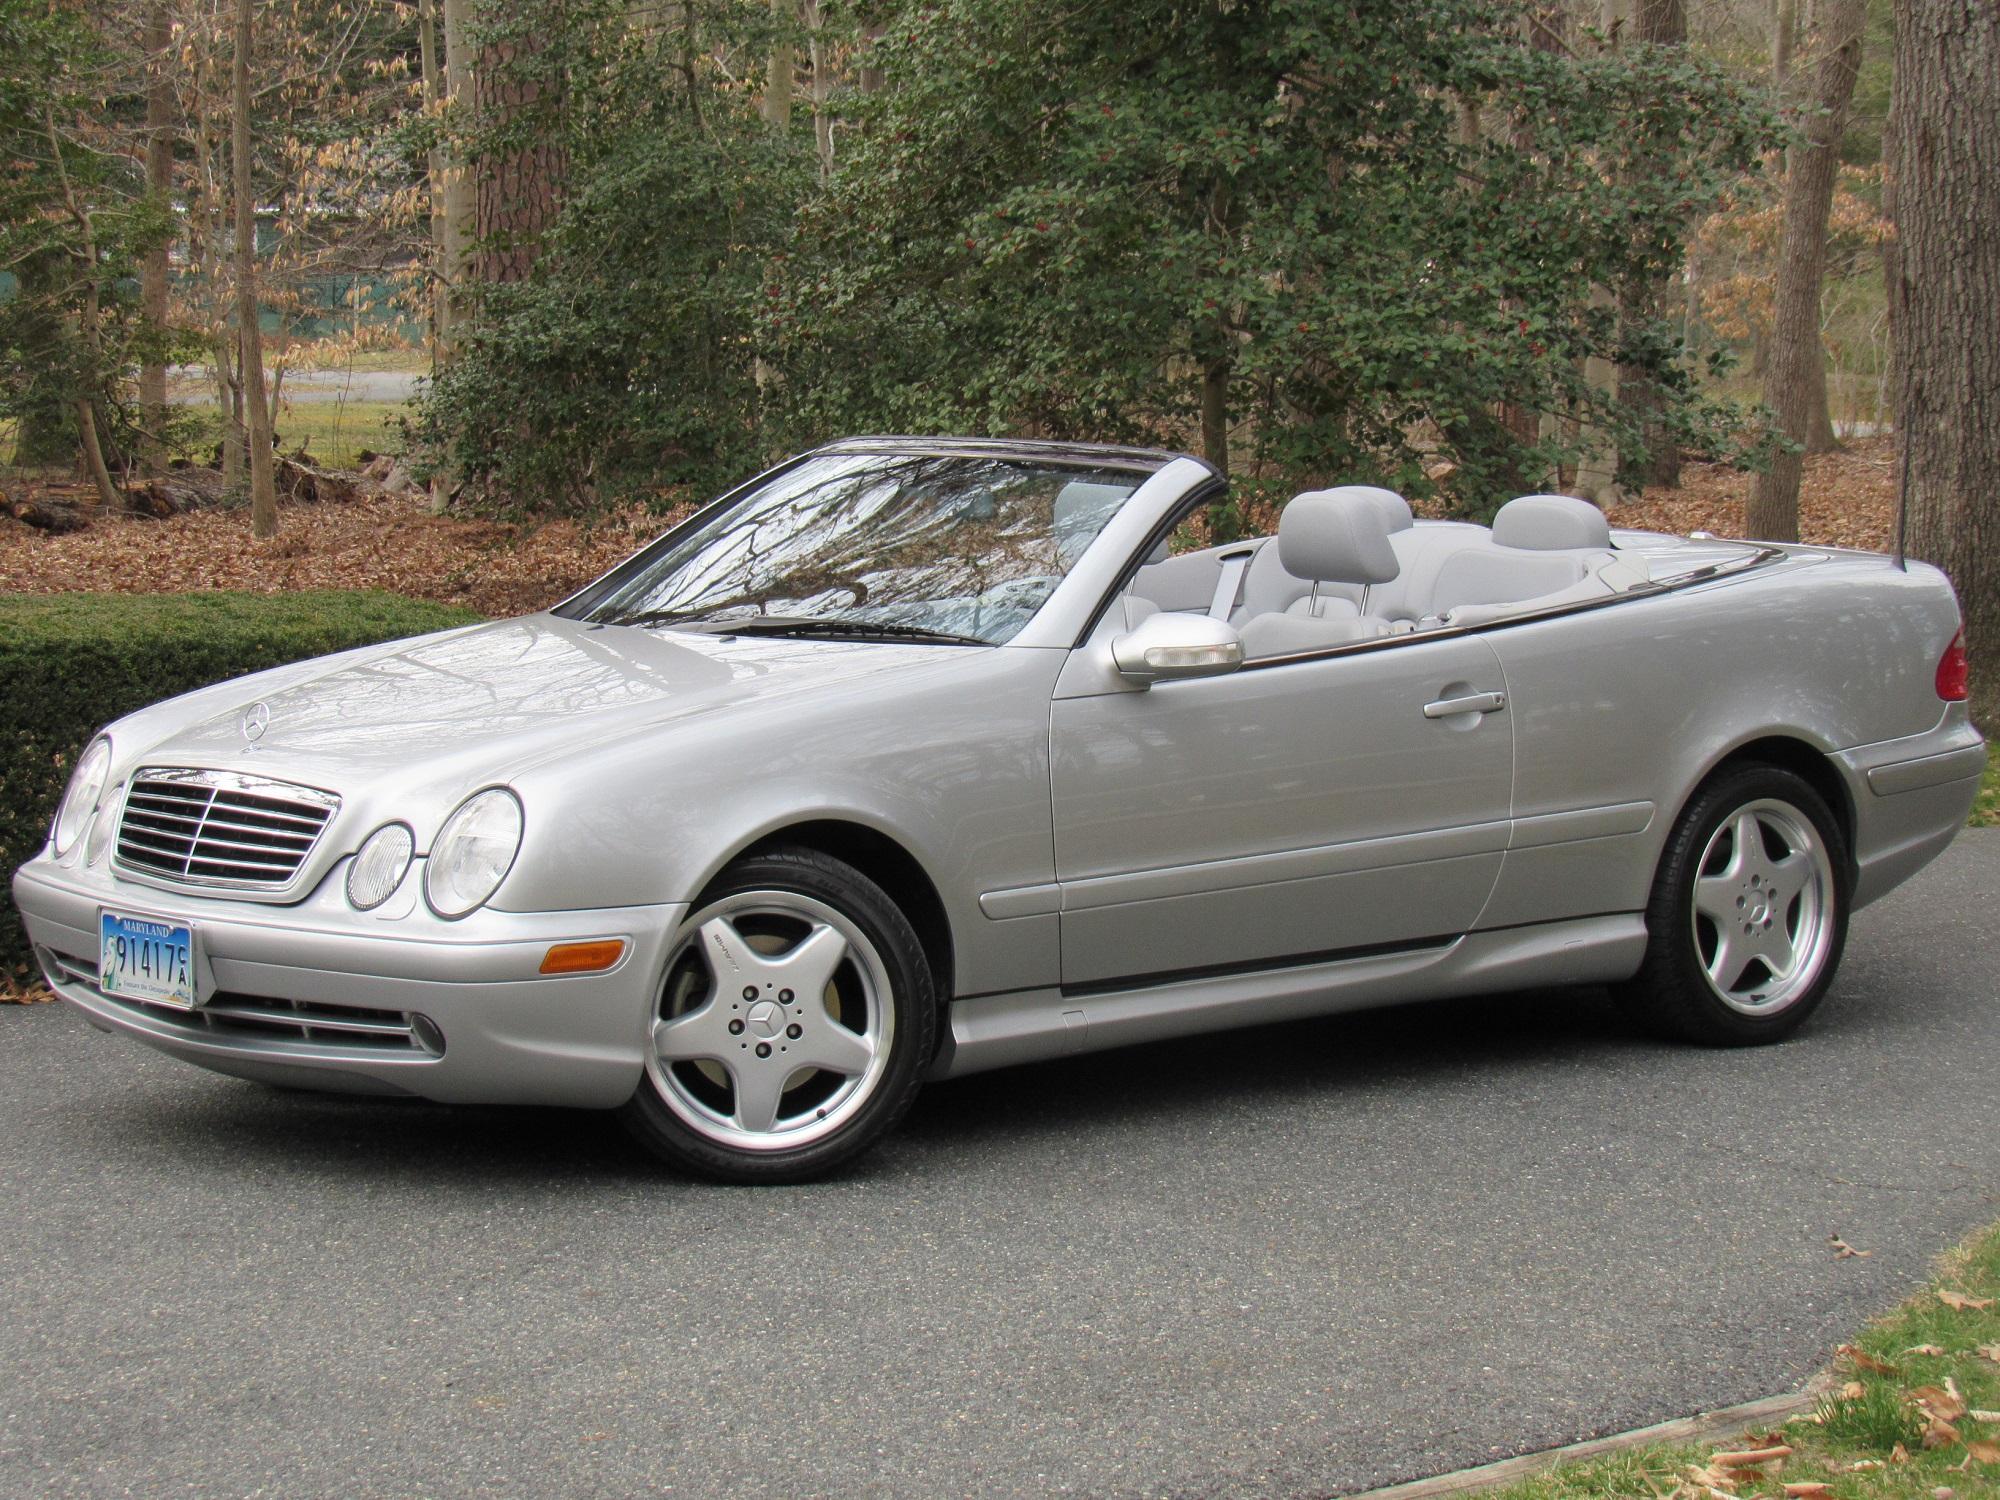 No Reserve: 2001 Mercedes-Benz CLK430 Cabriolet for sale on BaT Auctions -  sold for $14,250 on April 28, 2021 (Lot #47,055) | Bring a Trailer